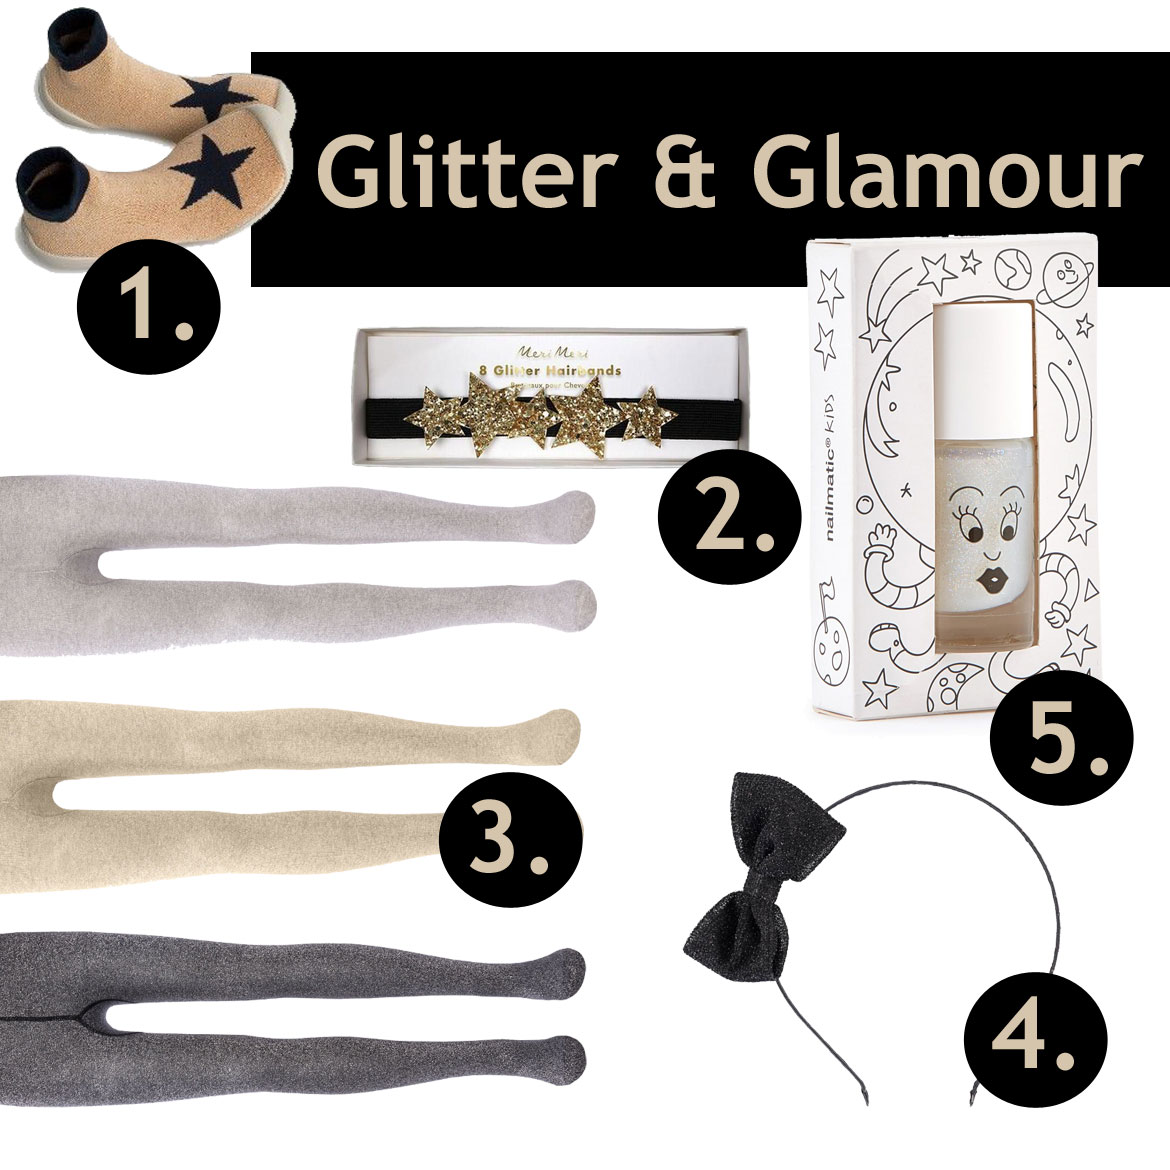 Glitter & Glamour